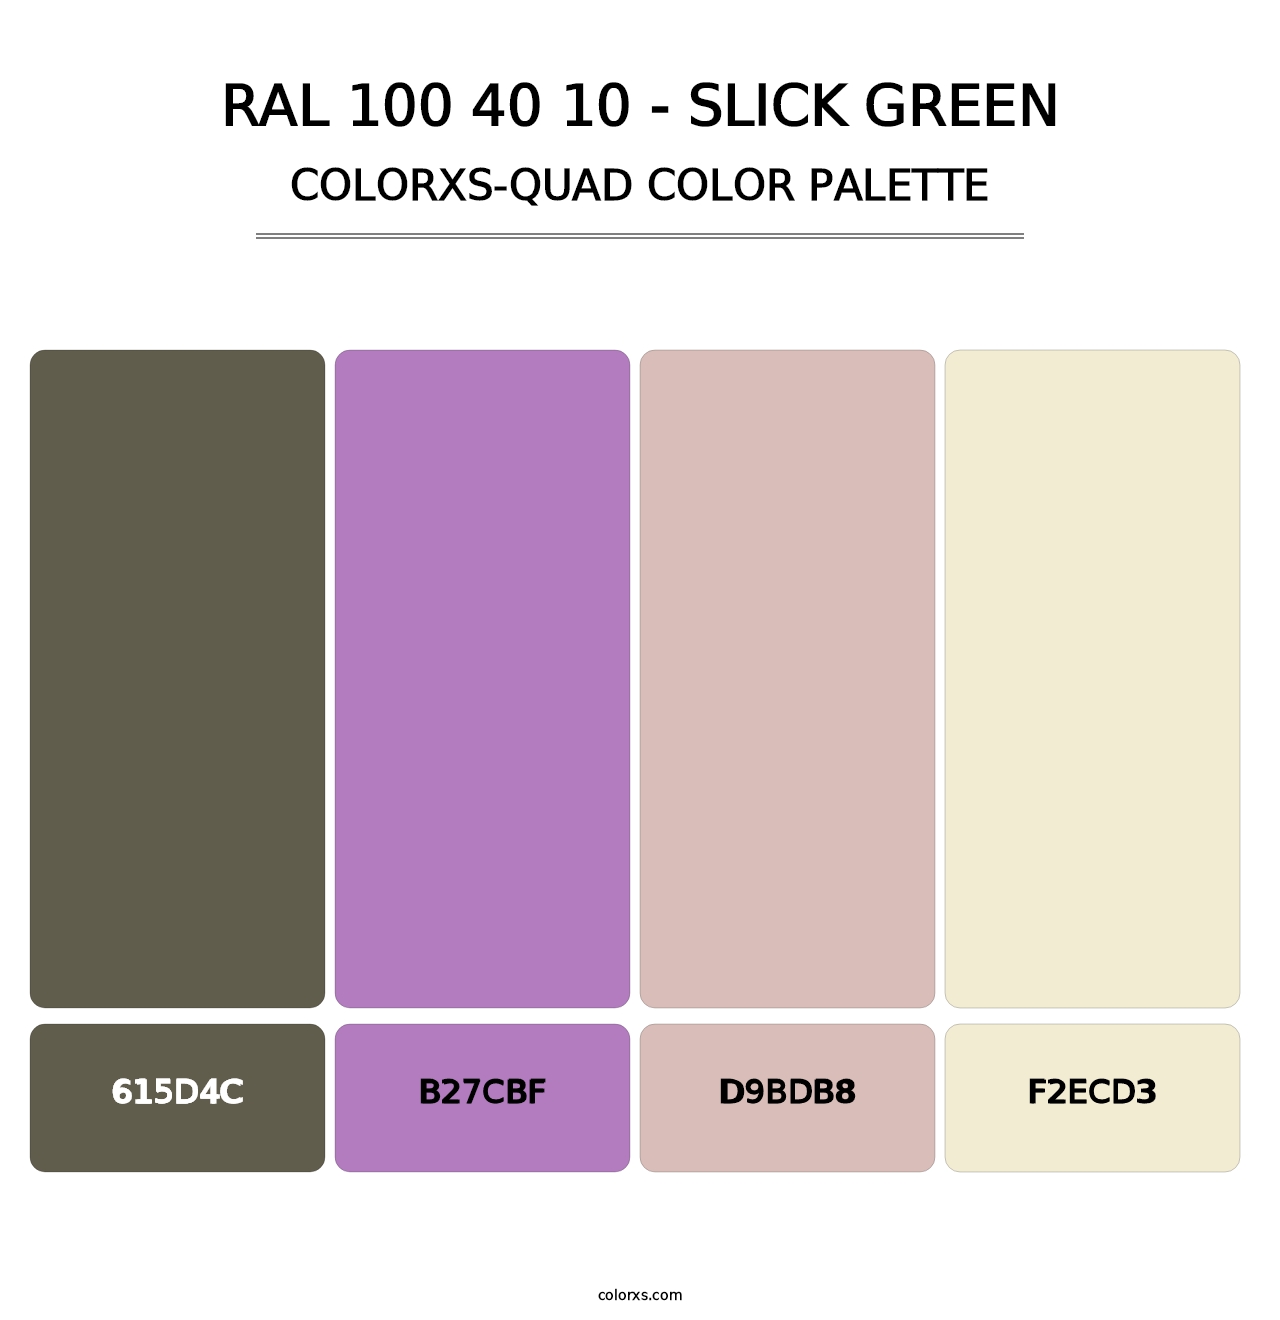 RAL 100 40 10 - Slick Green - Colorxs Quad Palette